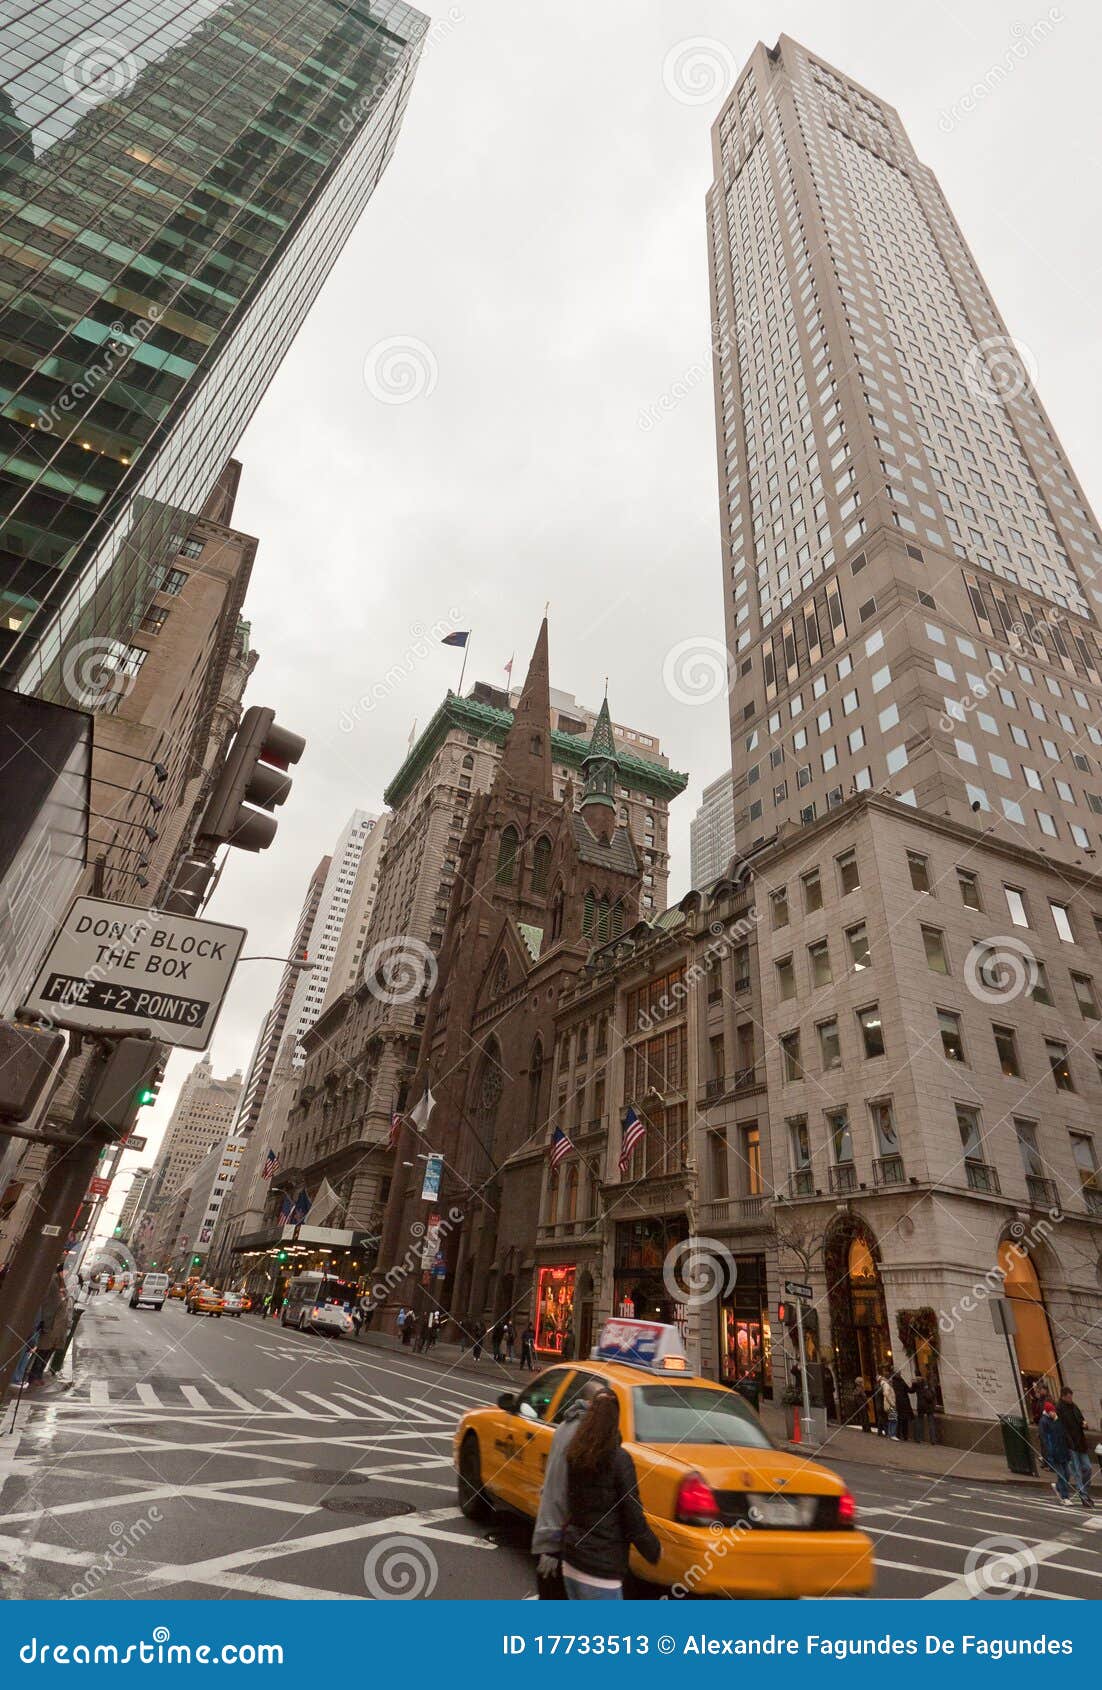 Cab In 5th Avenue New York City Editorial Stock Photo Image Of Corner Presbyterian 17733513